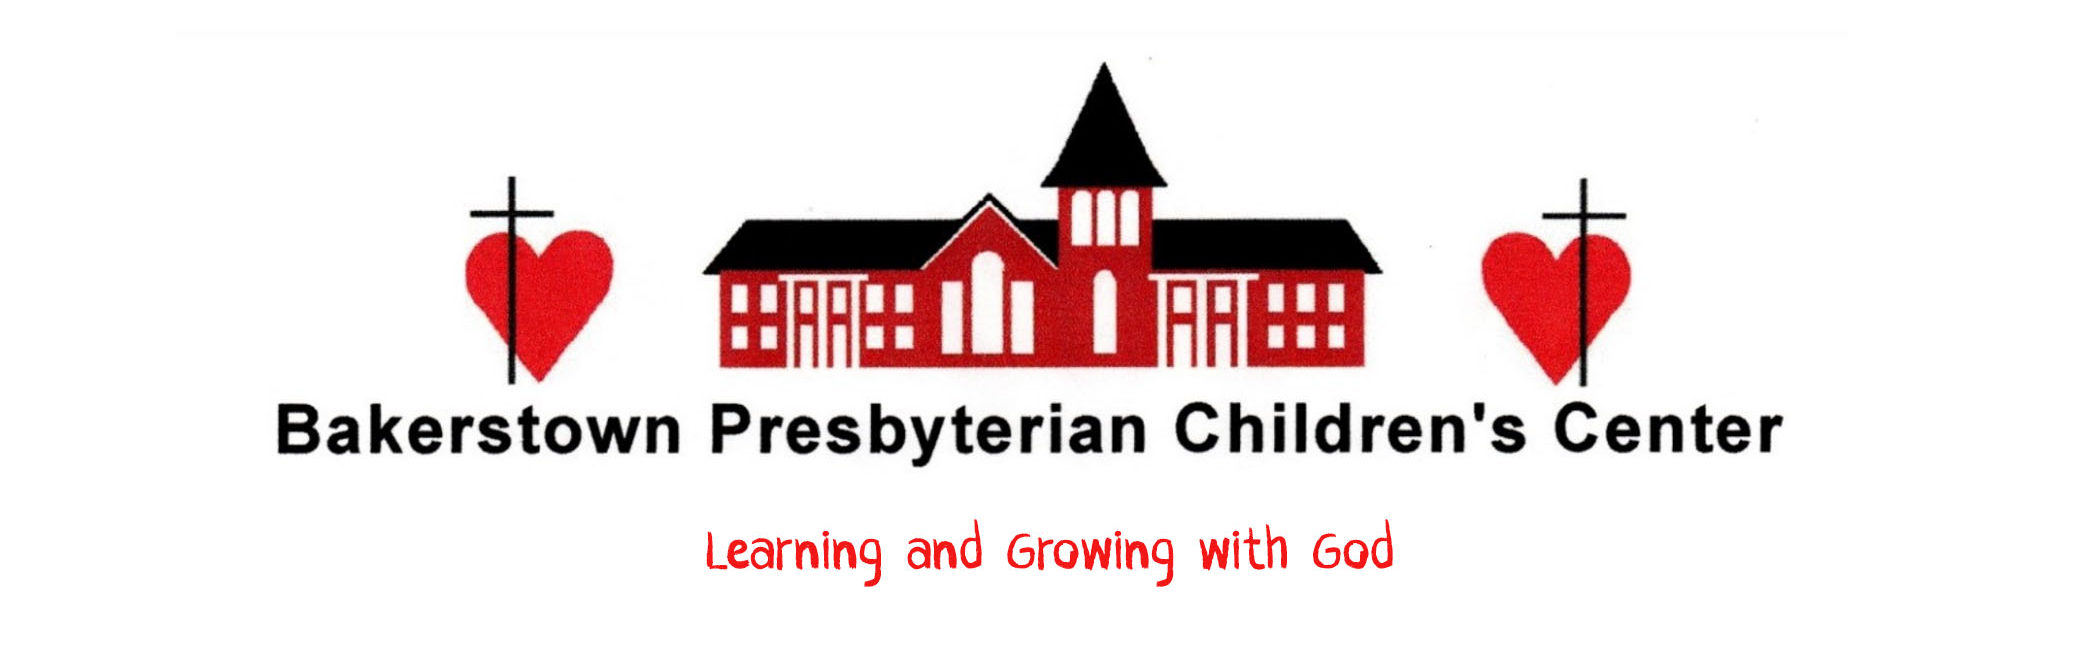 Bakerstown Presbyterian Children's Center